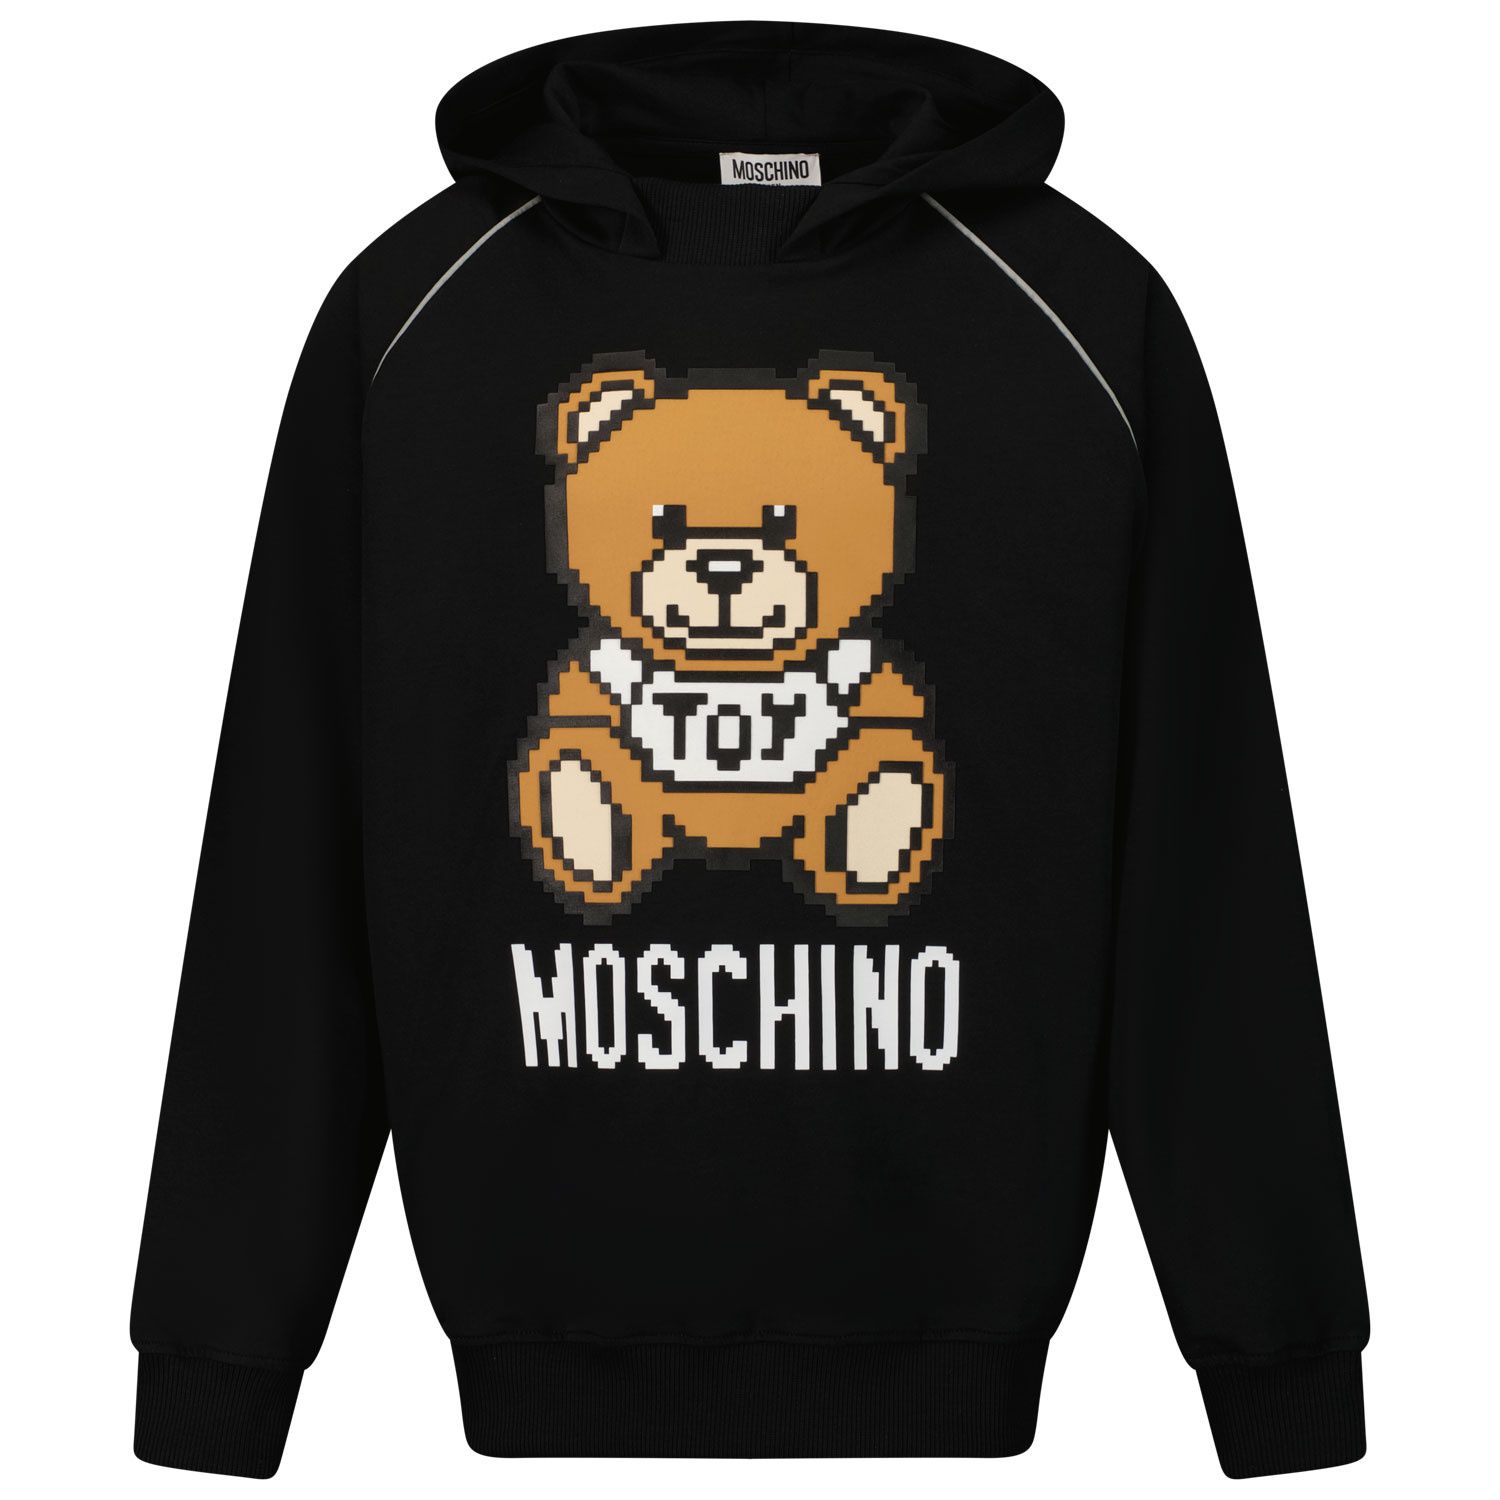 Picture of Moschino HUF05Q kids sweater black